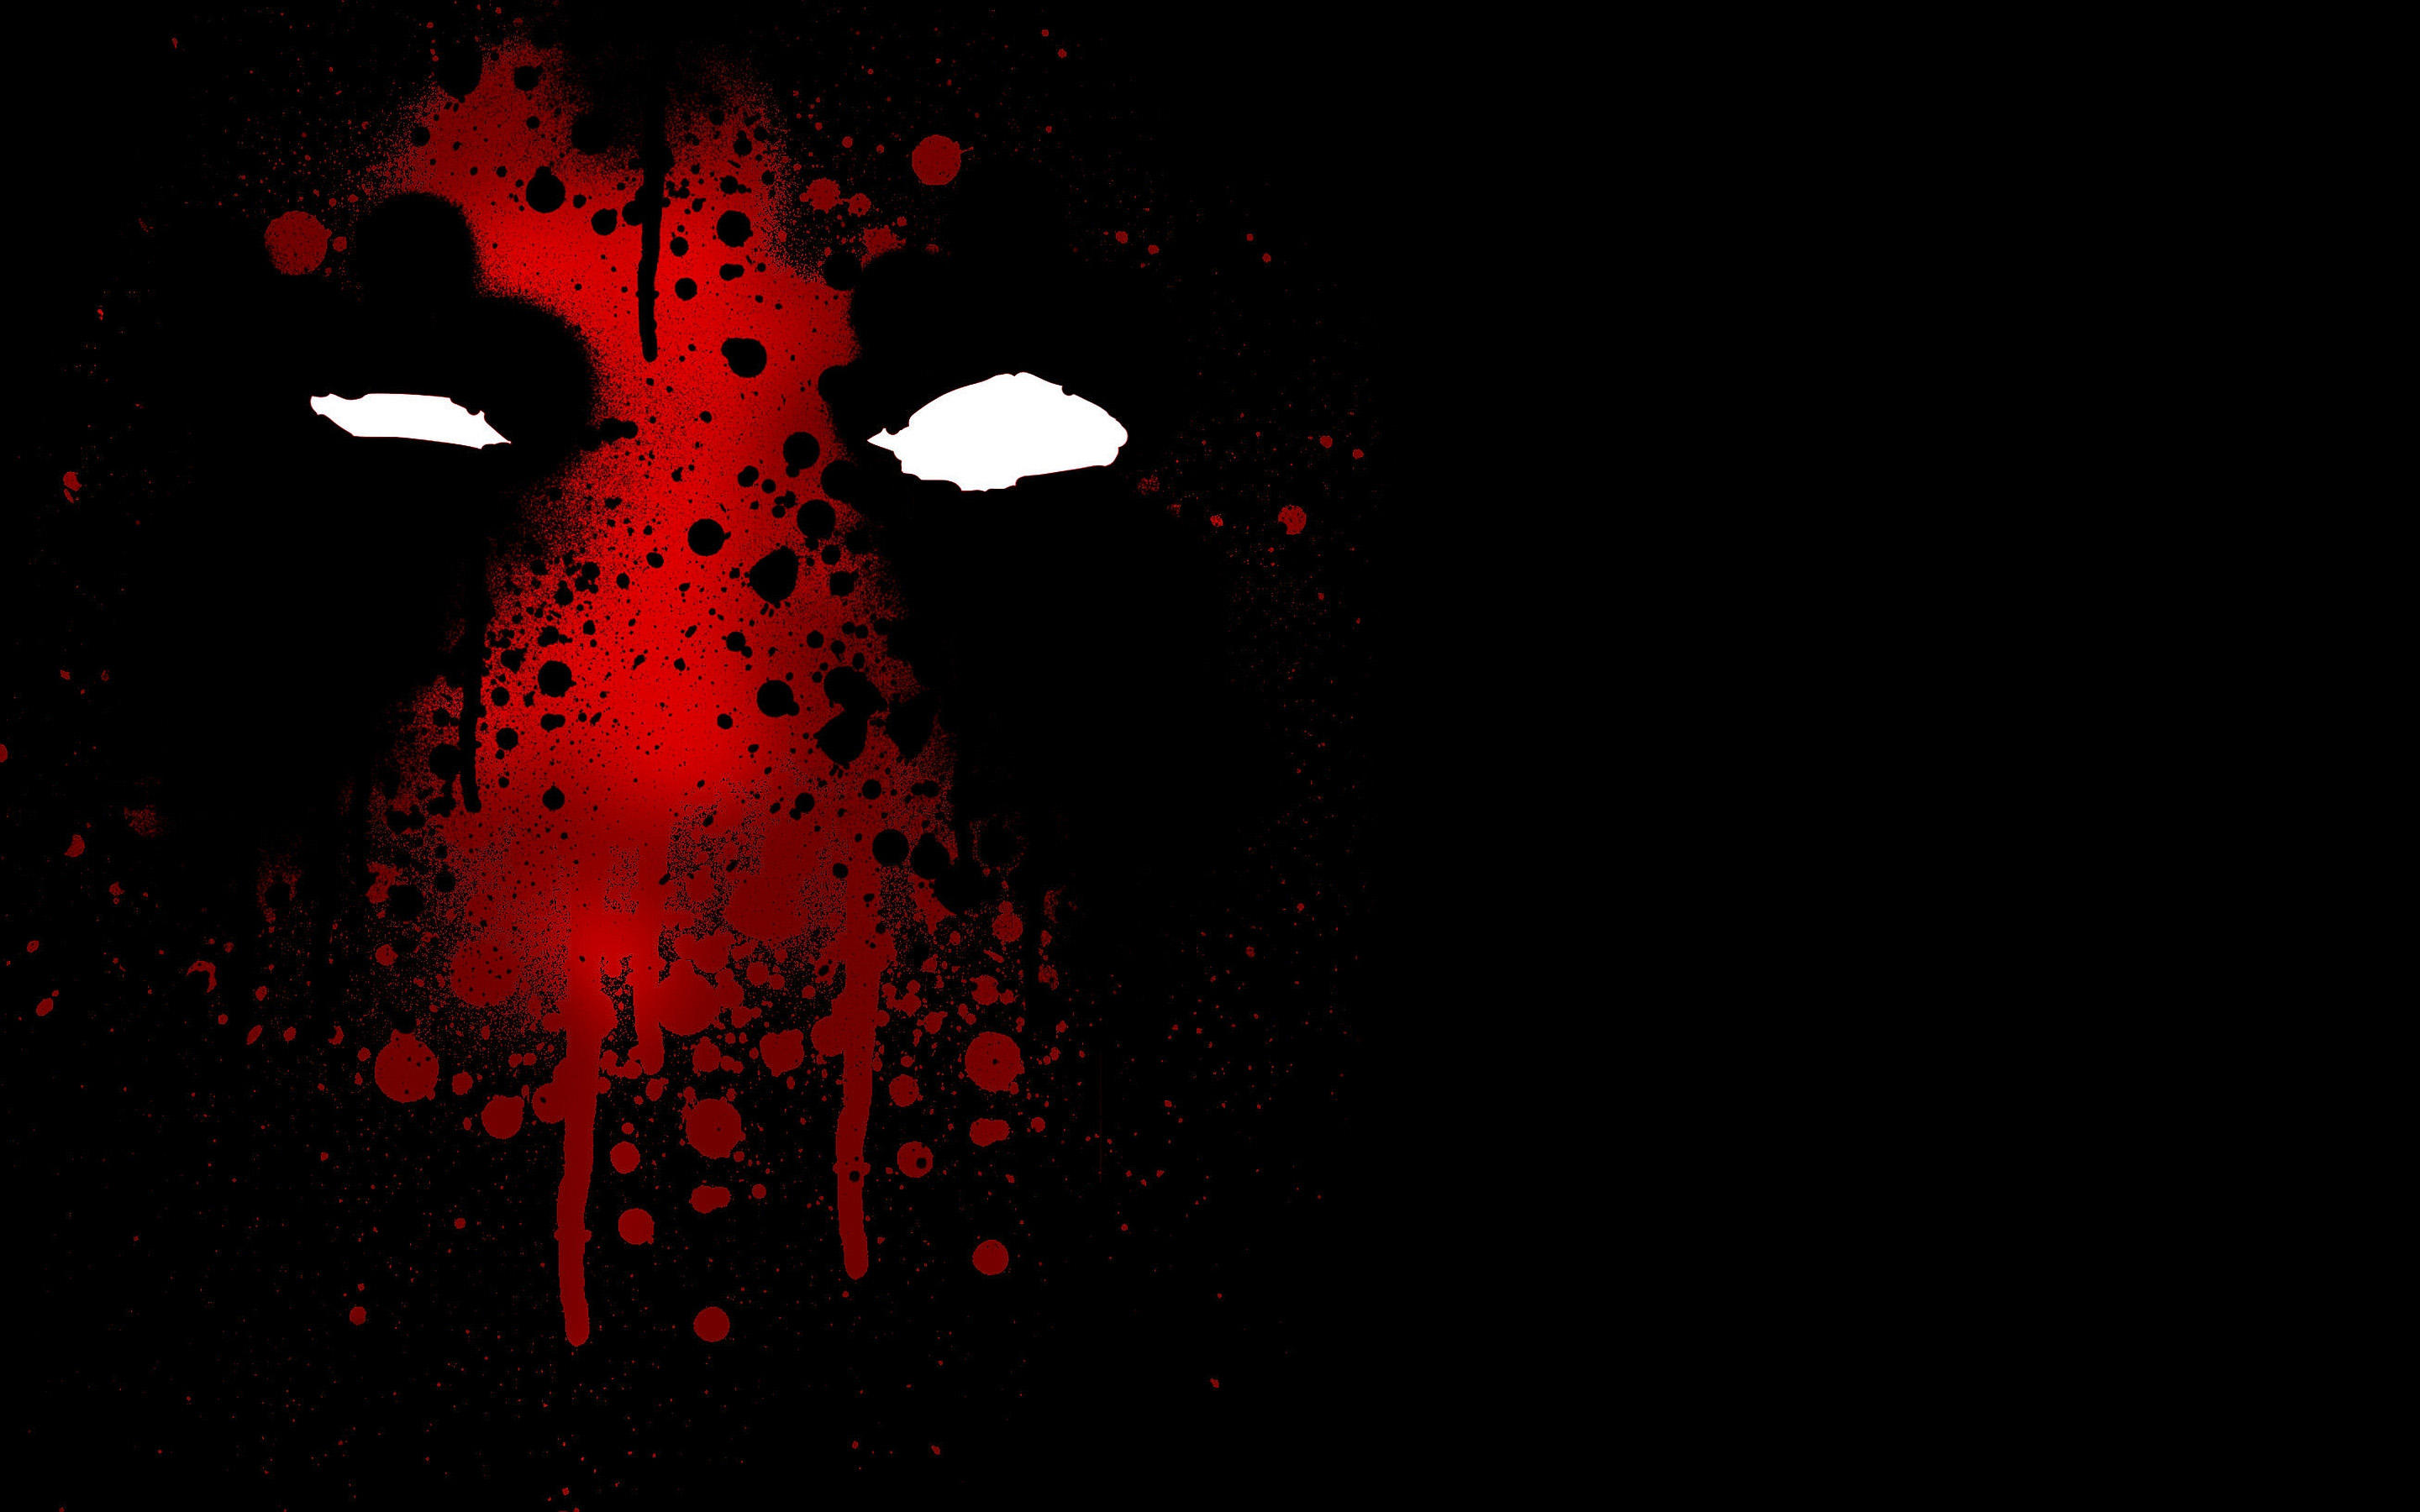 An artistic image of Marvel's Deadpool